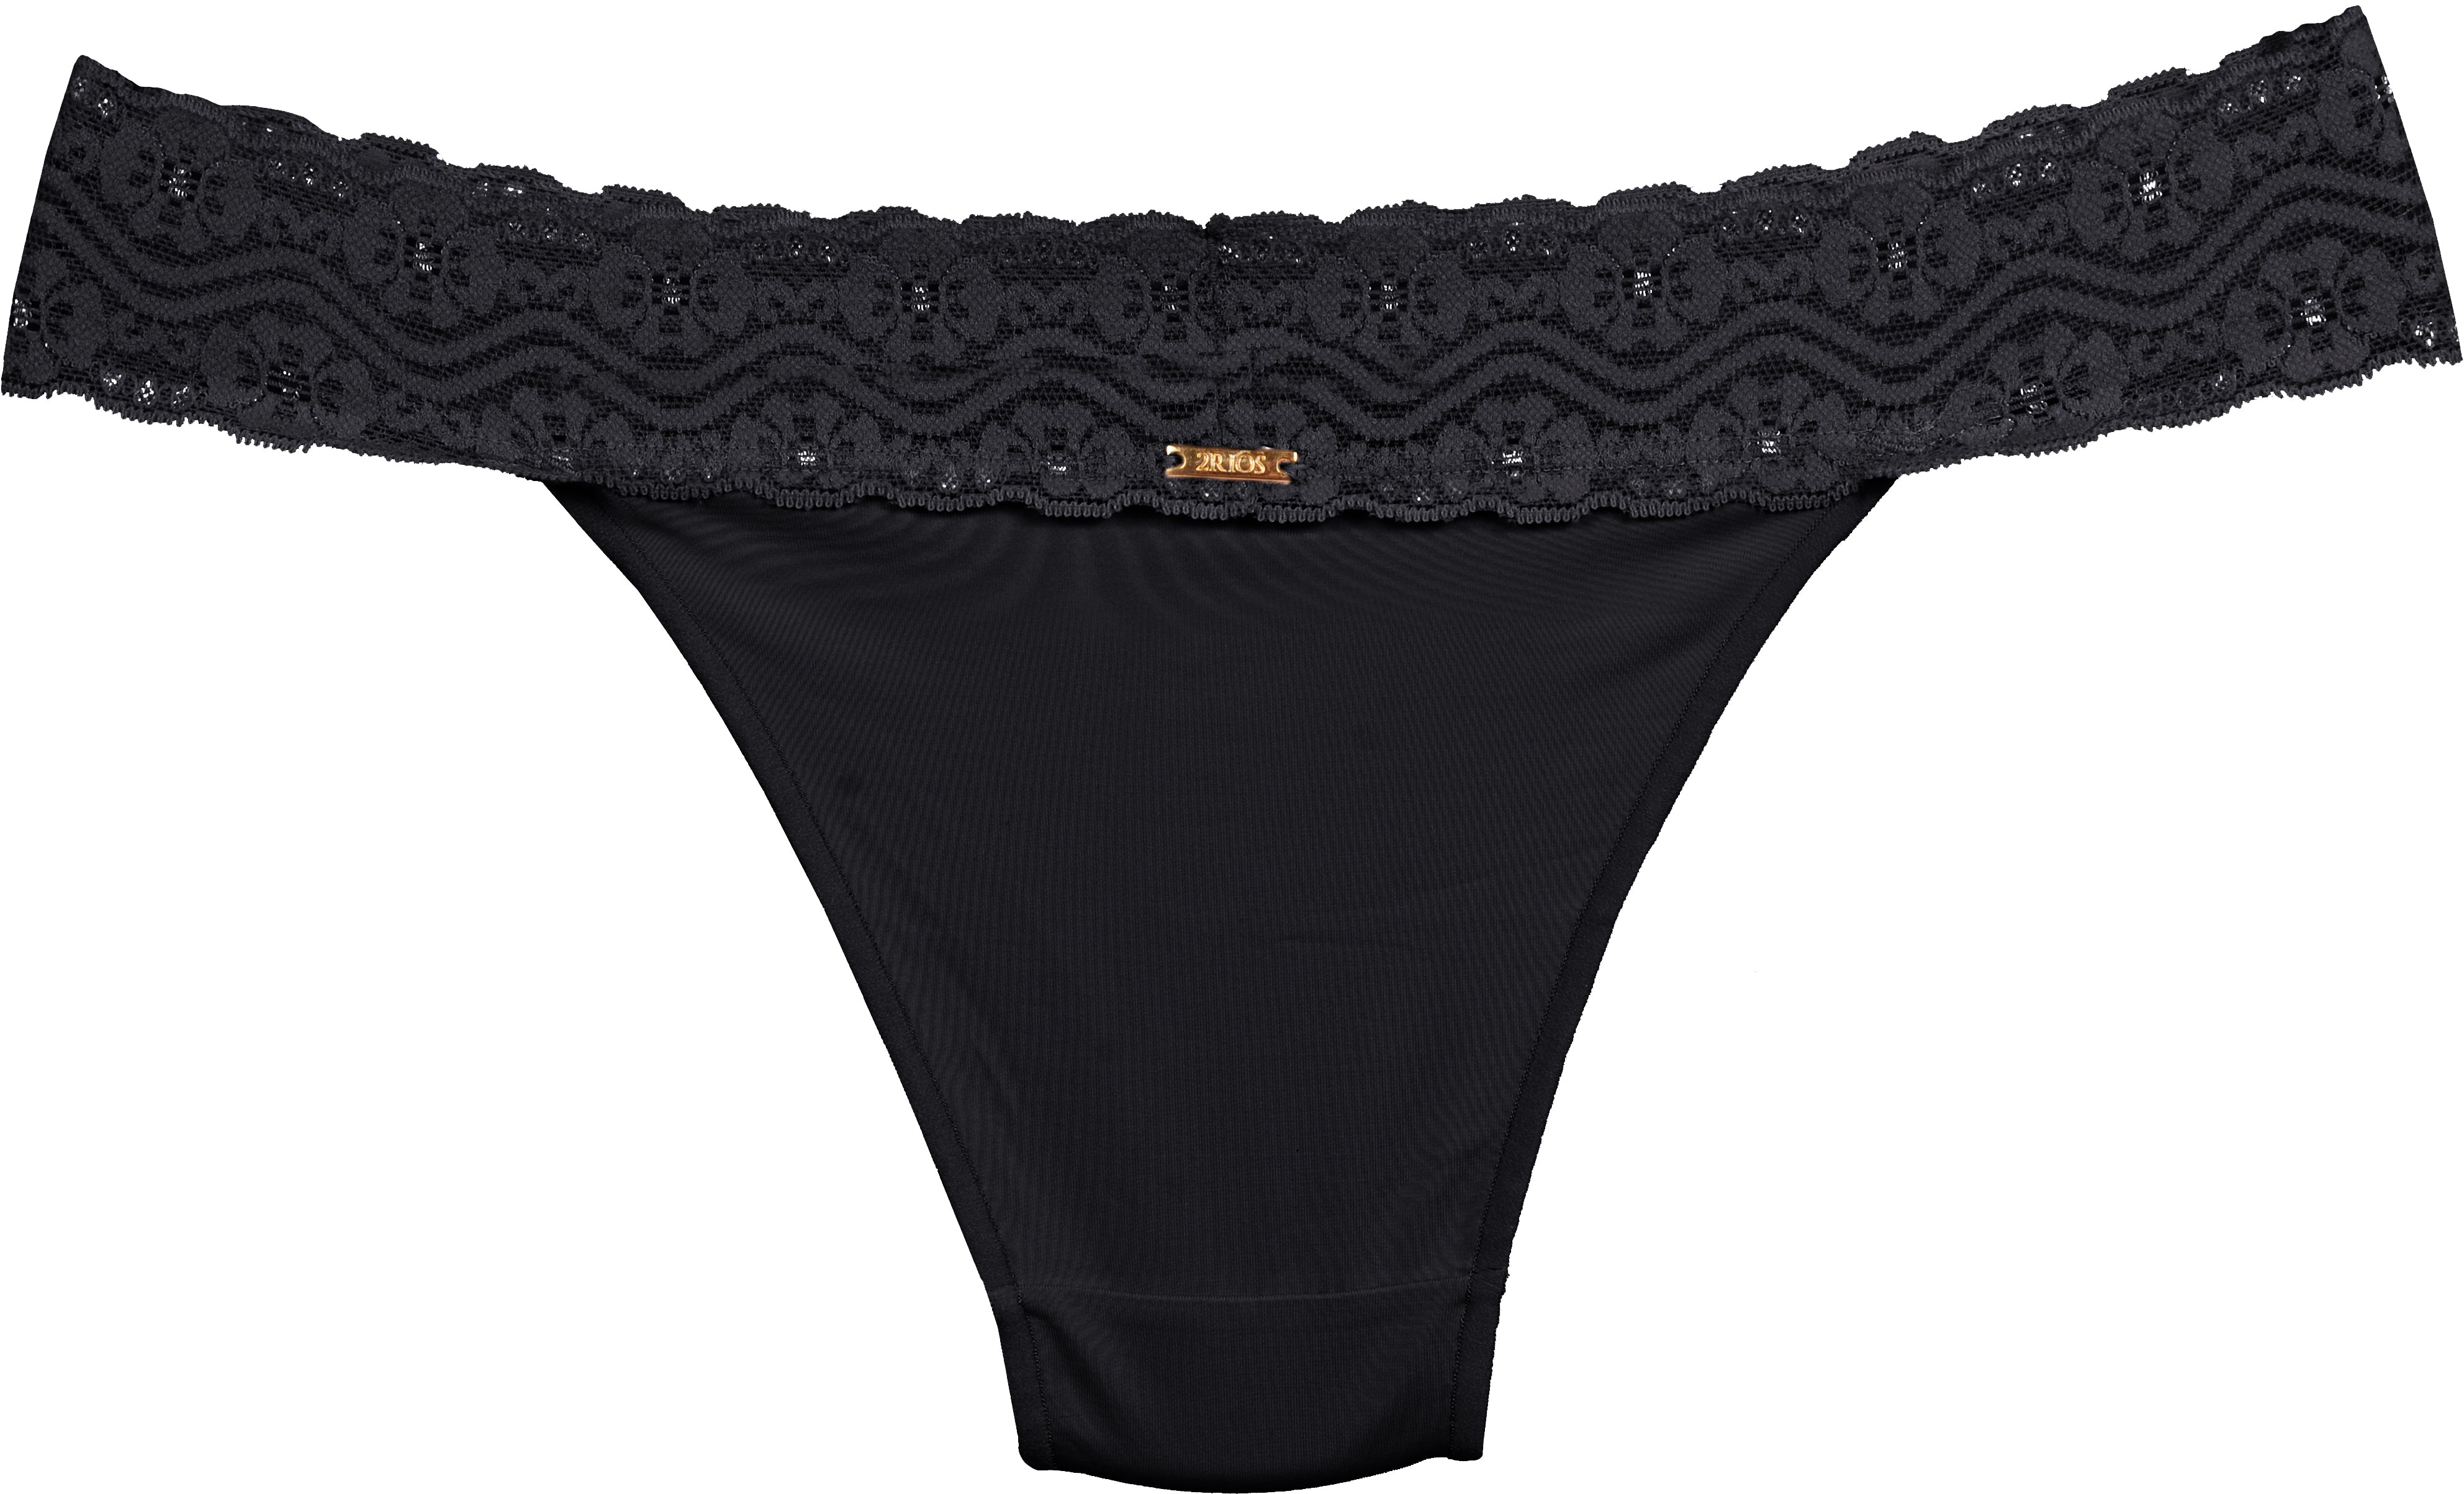 Women Lace Underwear, Black Panty, Lace Brazilian Bikini, Sexy